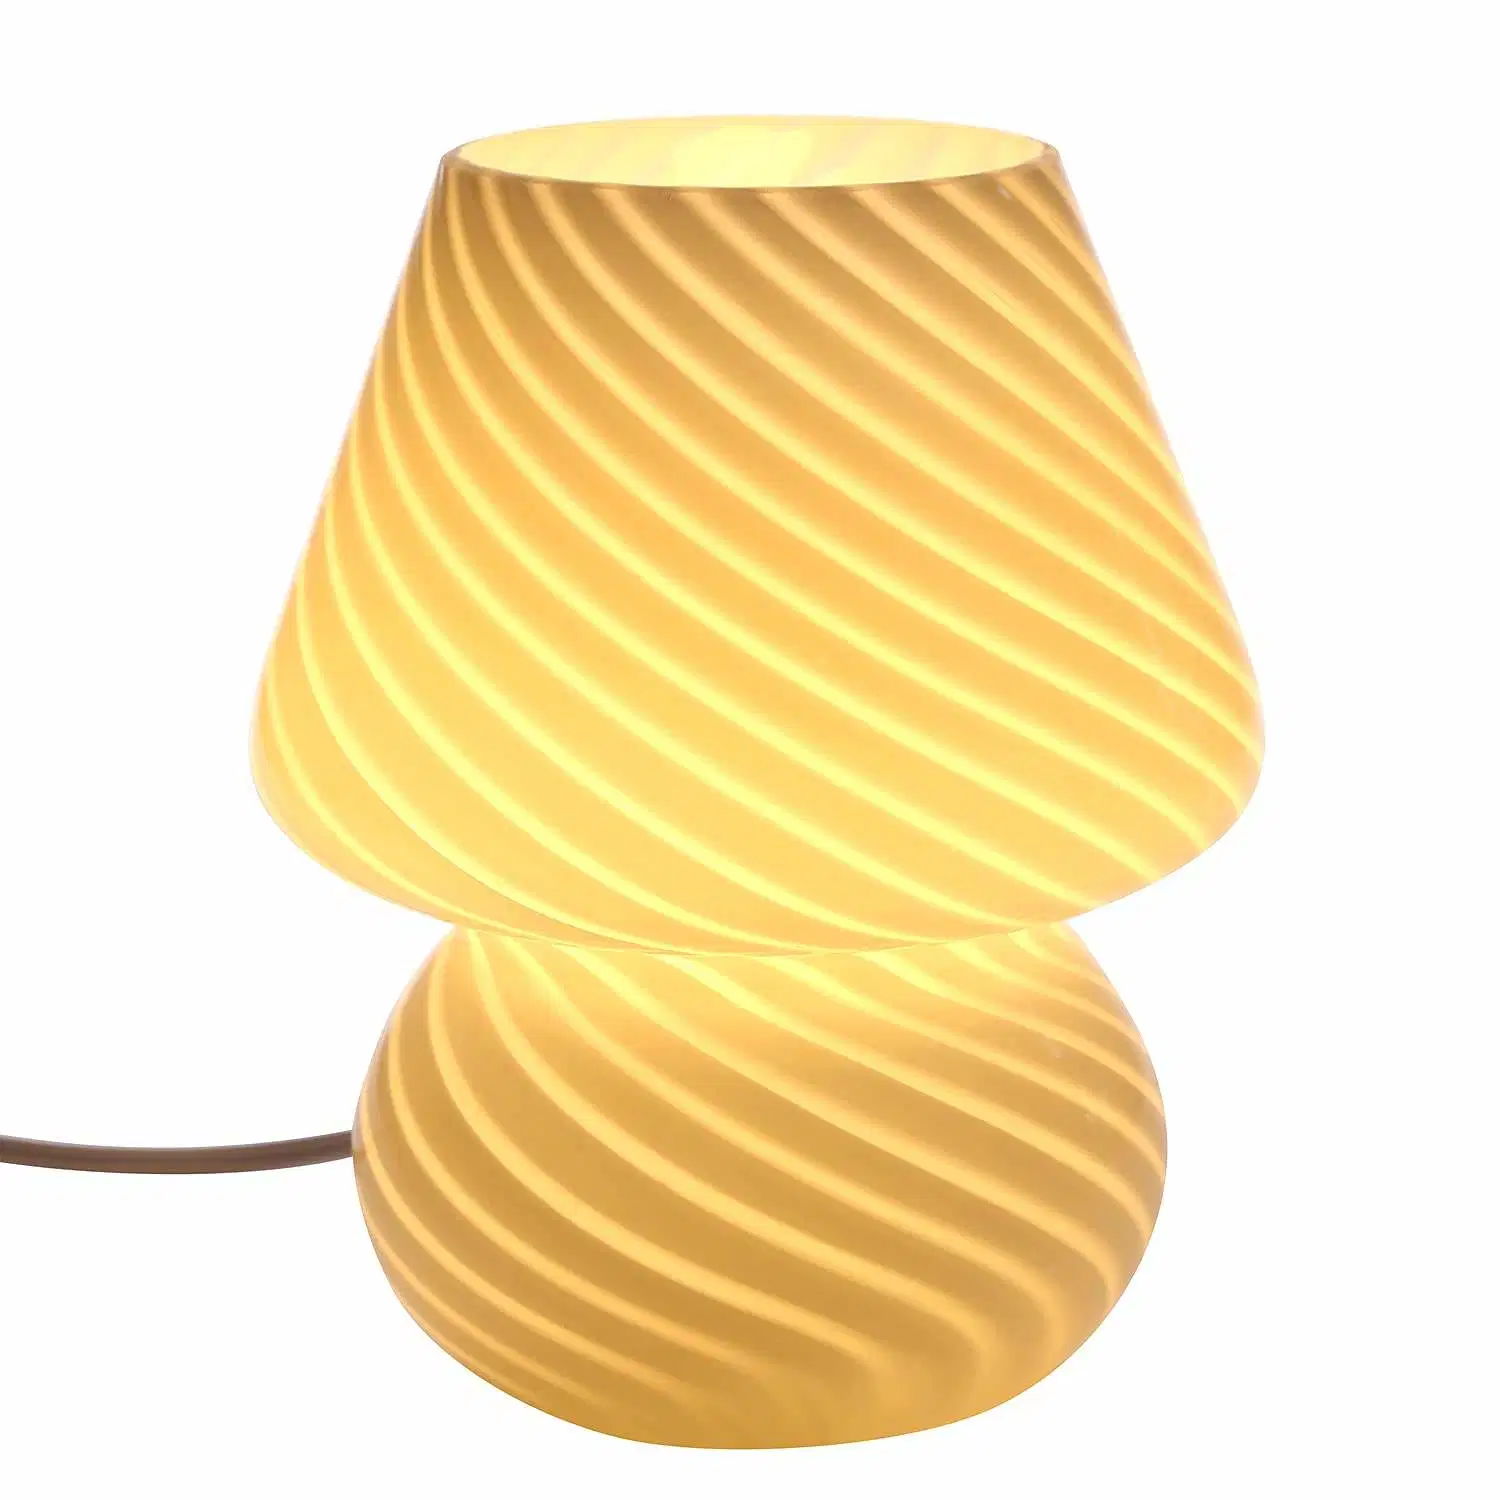 Decorative Hotel Bedroom Luxury LED Mushroom Glass Bedside Lamps Small Night Table Light Lamp